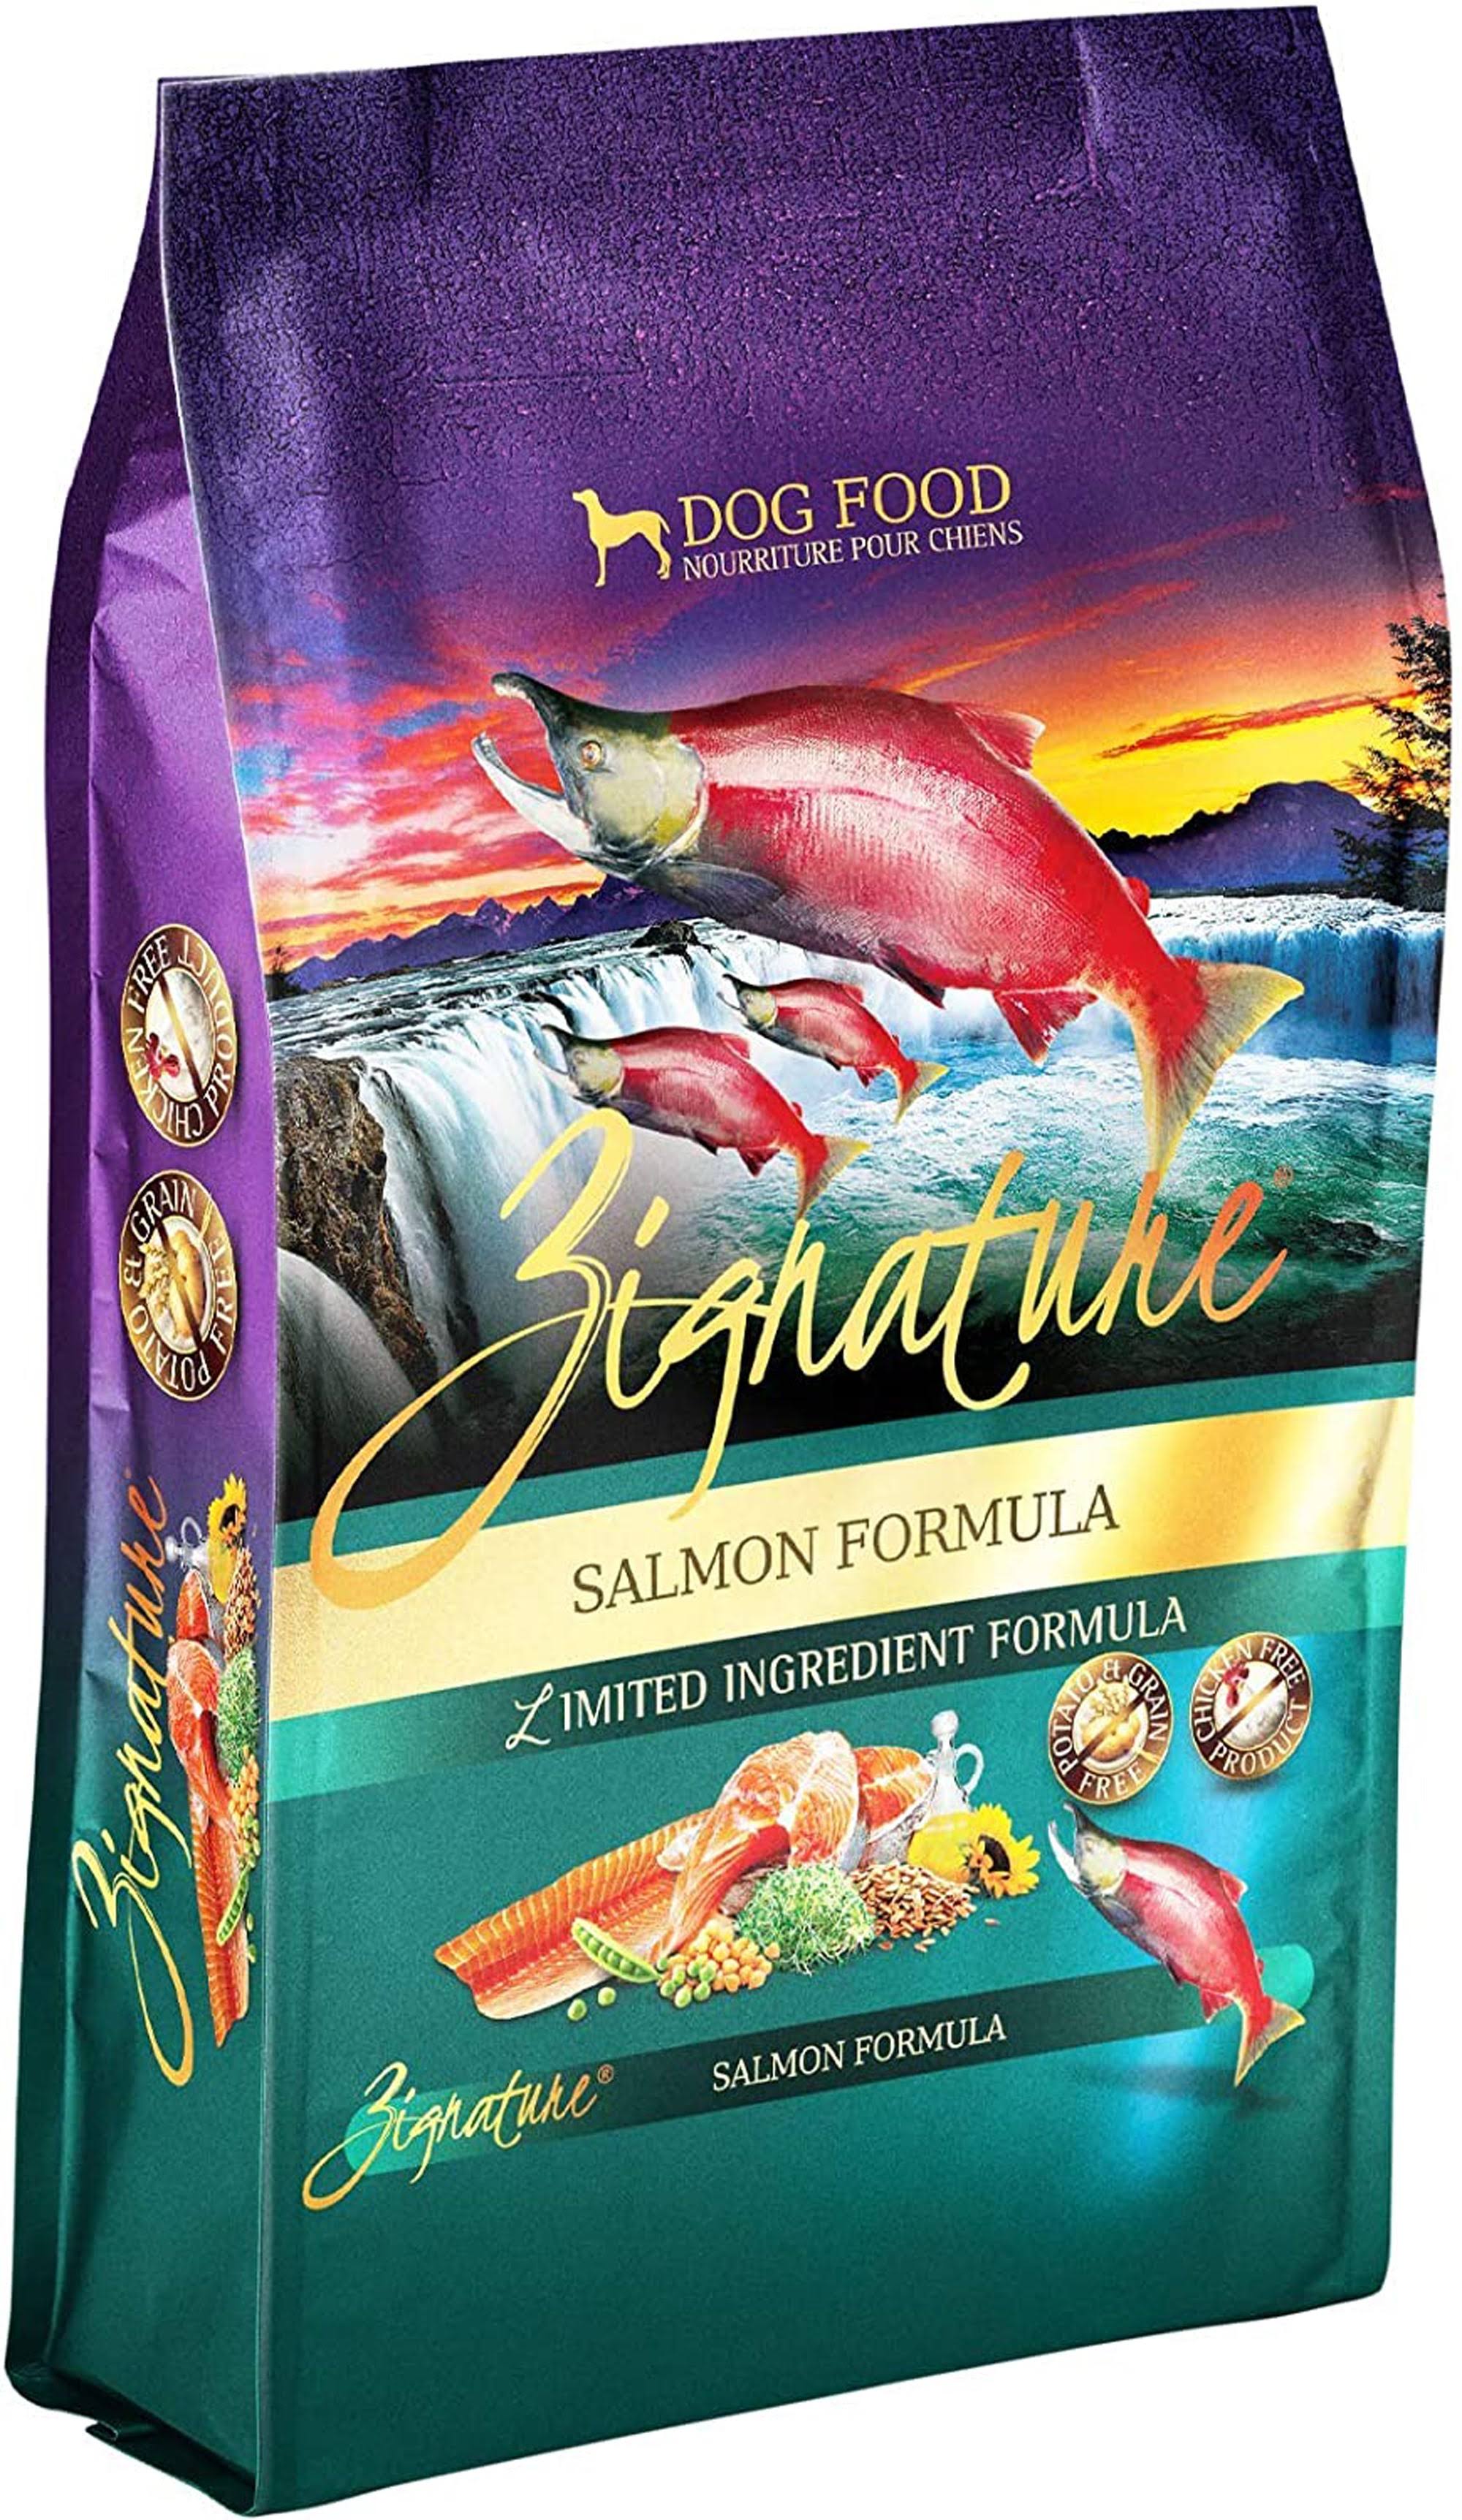 Zignature Limited Ingredient Formula (Dry) - Salmon - 4 lb